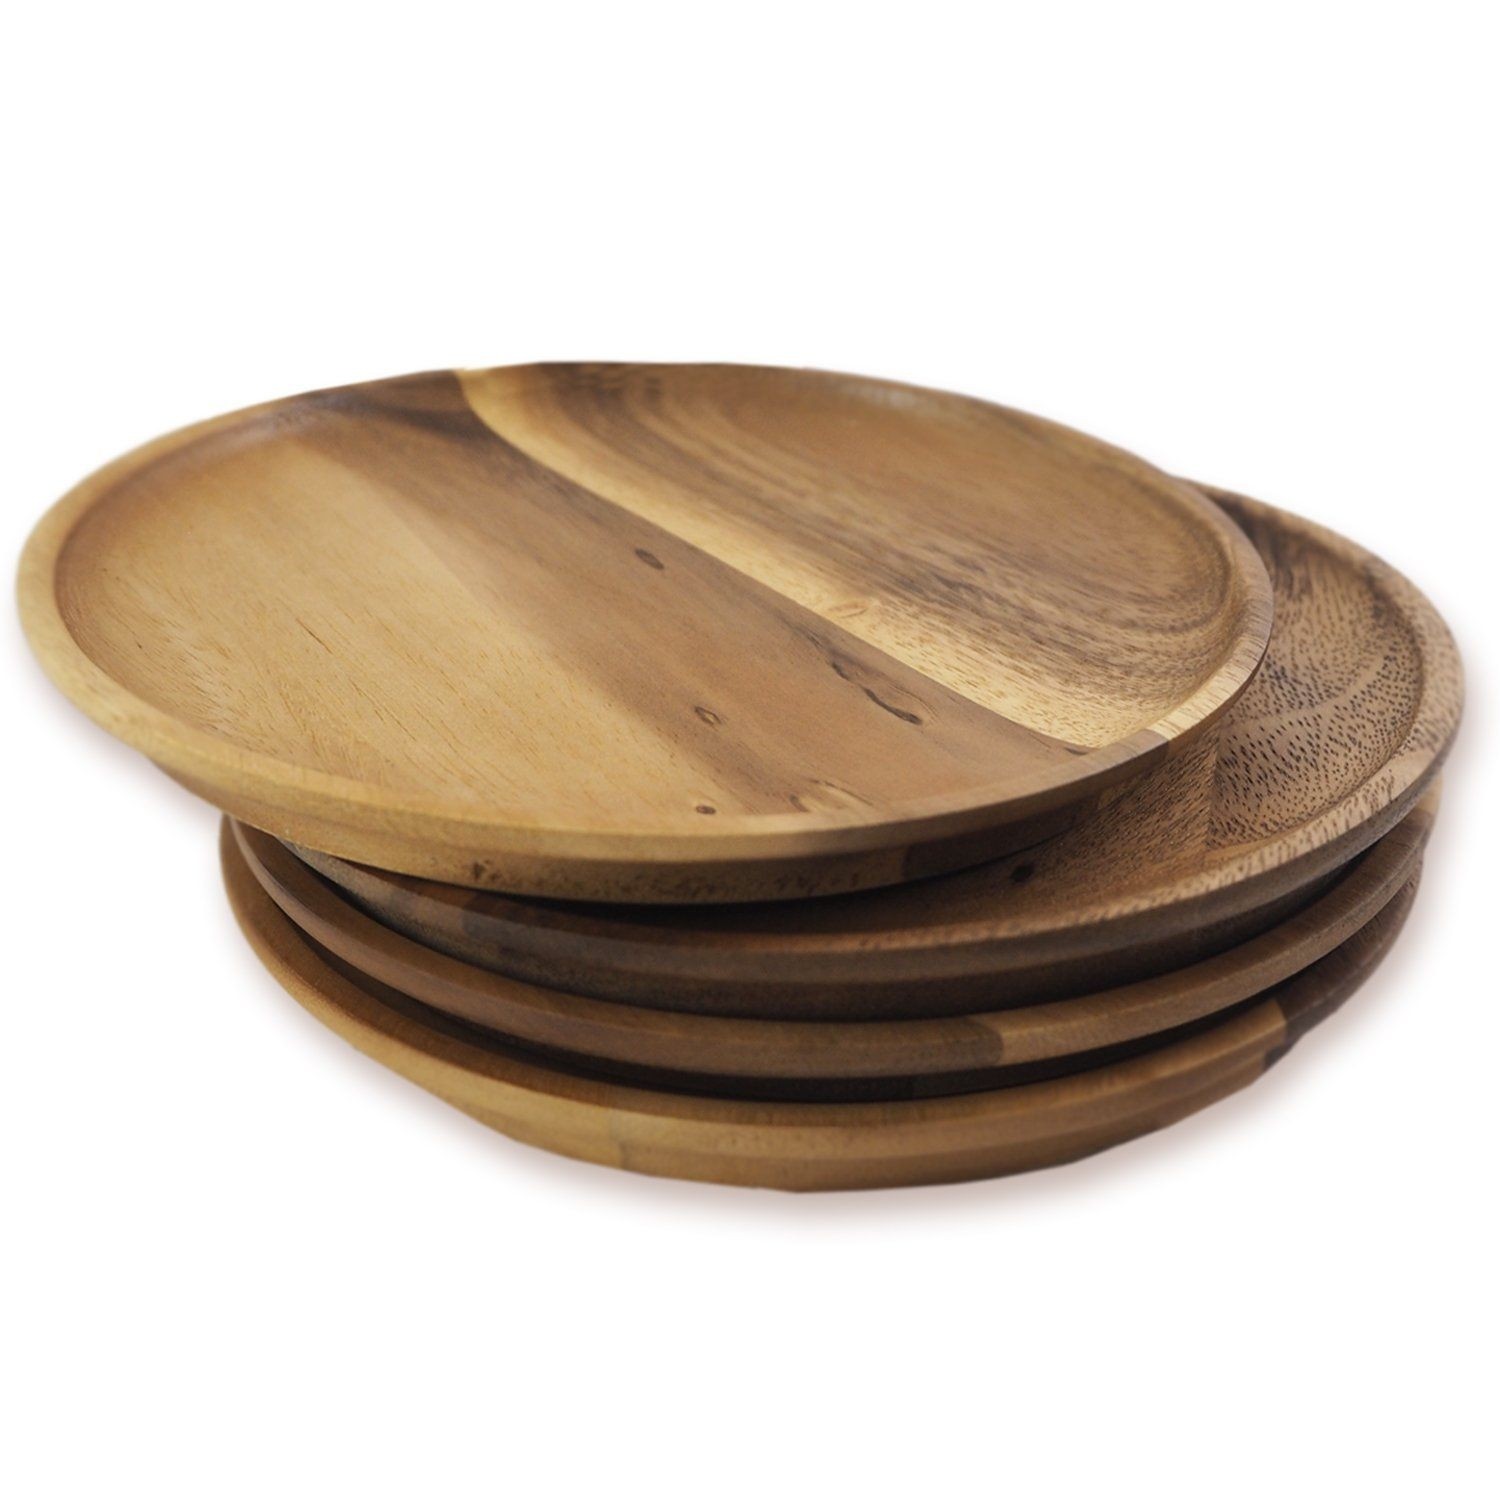 Roro round acacia wood serving plates